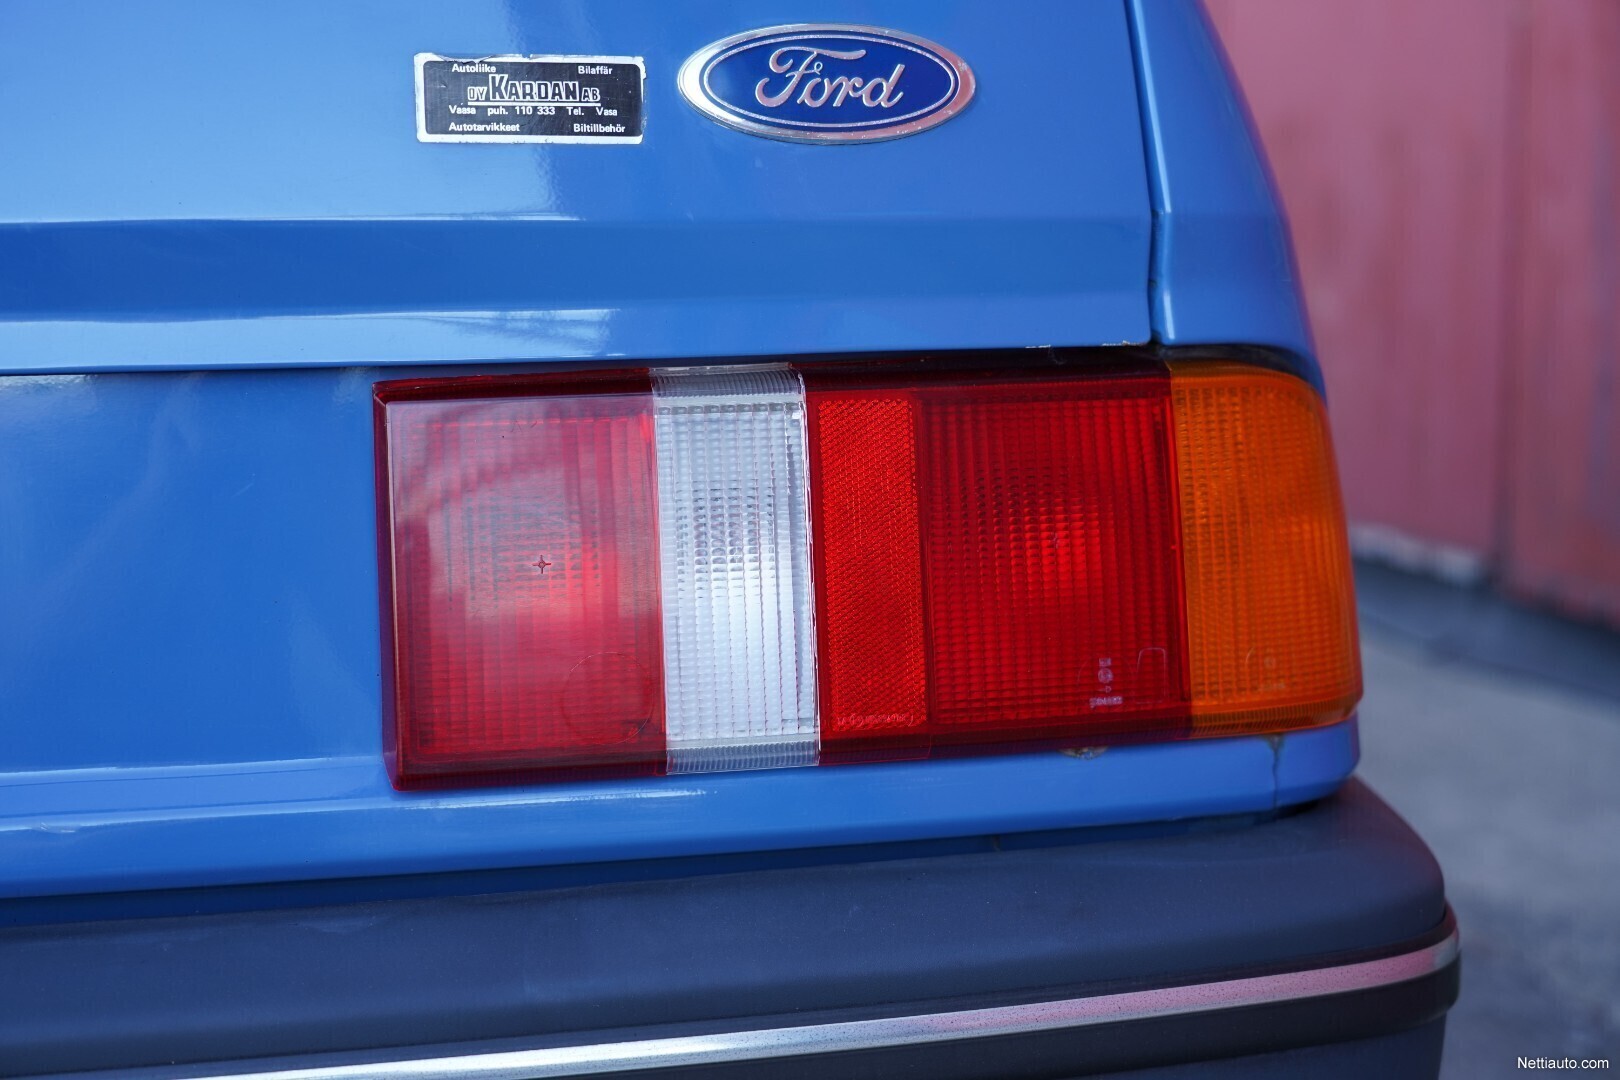 Ford Sierra 1.6 GL 5d Hatchback 1986 - Used vehicle - Nettiauto